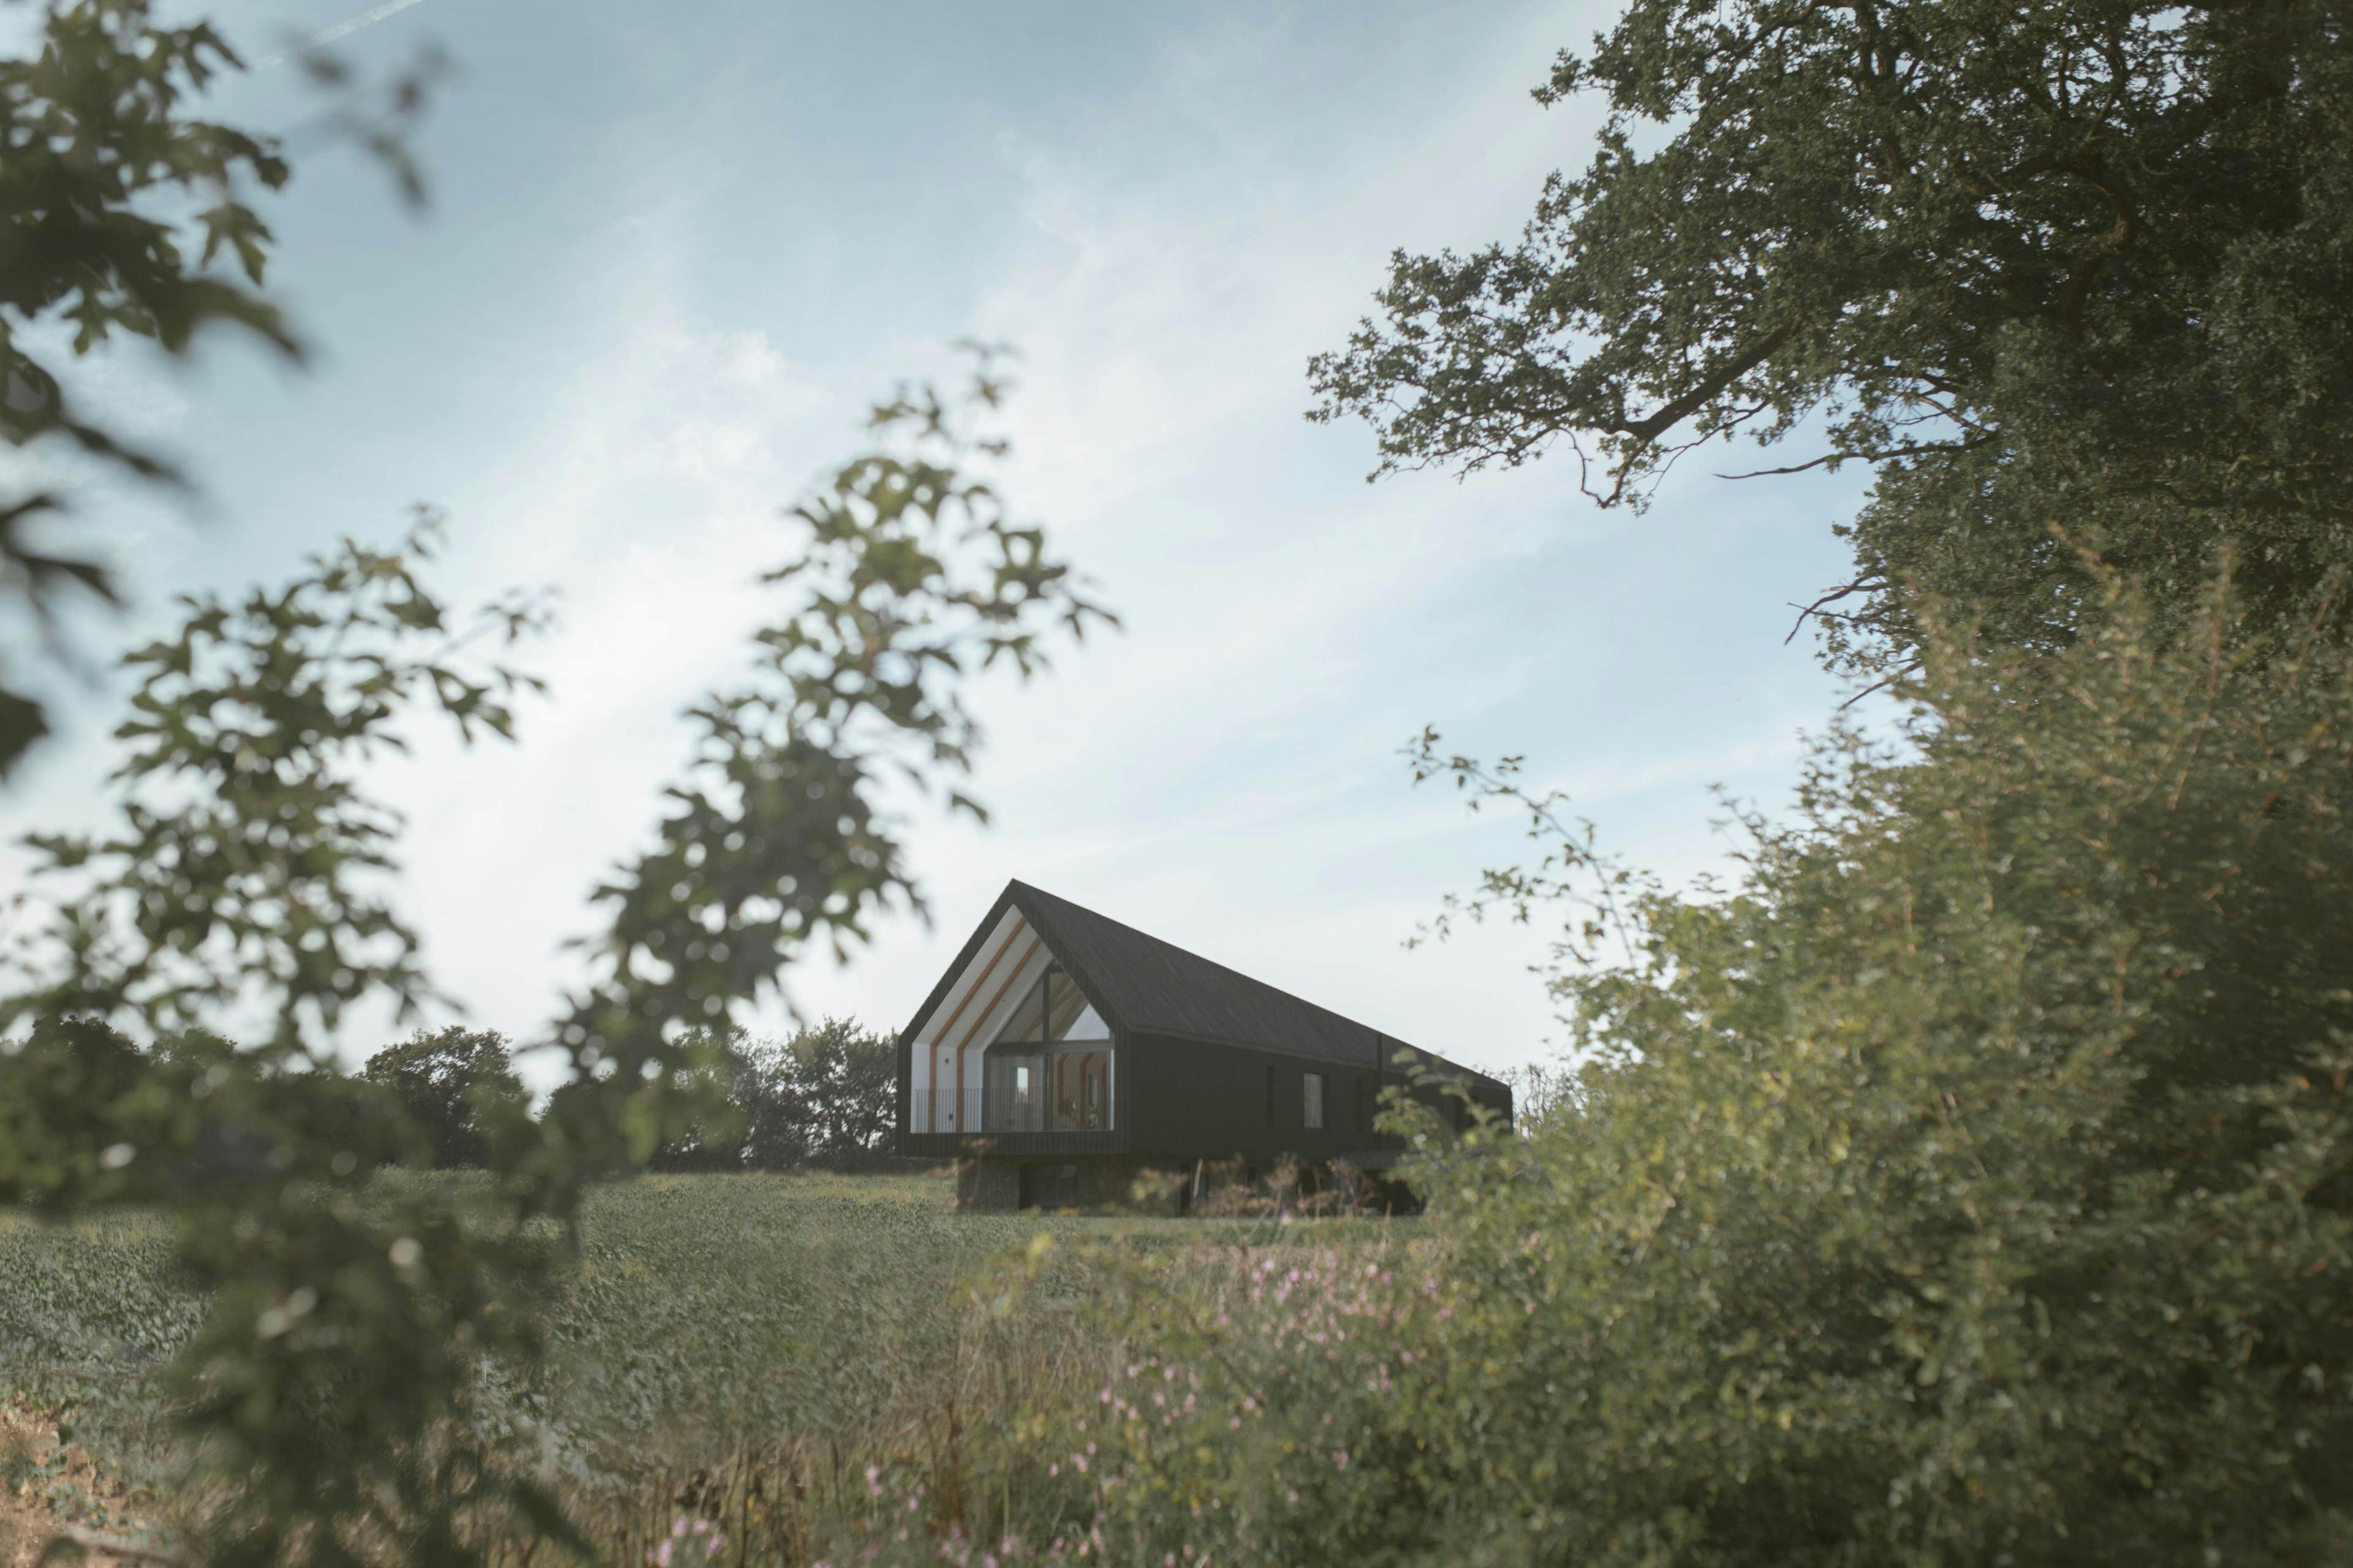 A rigorously environmental, modern interpretation of the agricultural black barn.